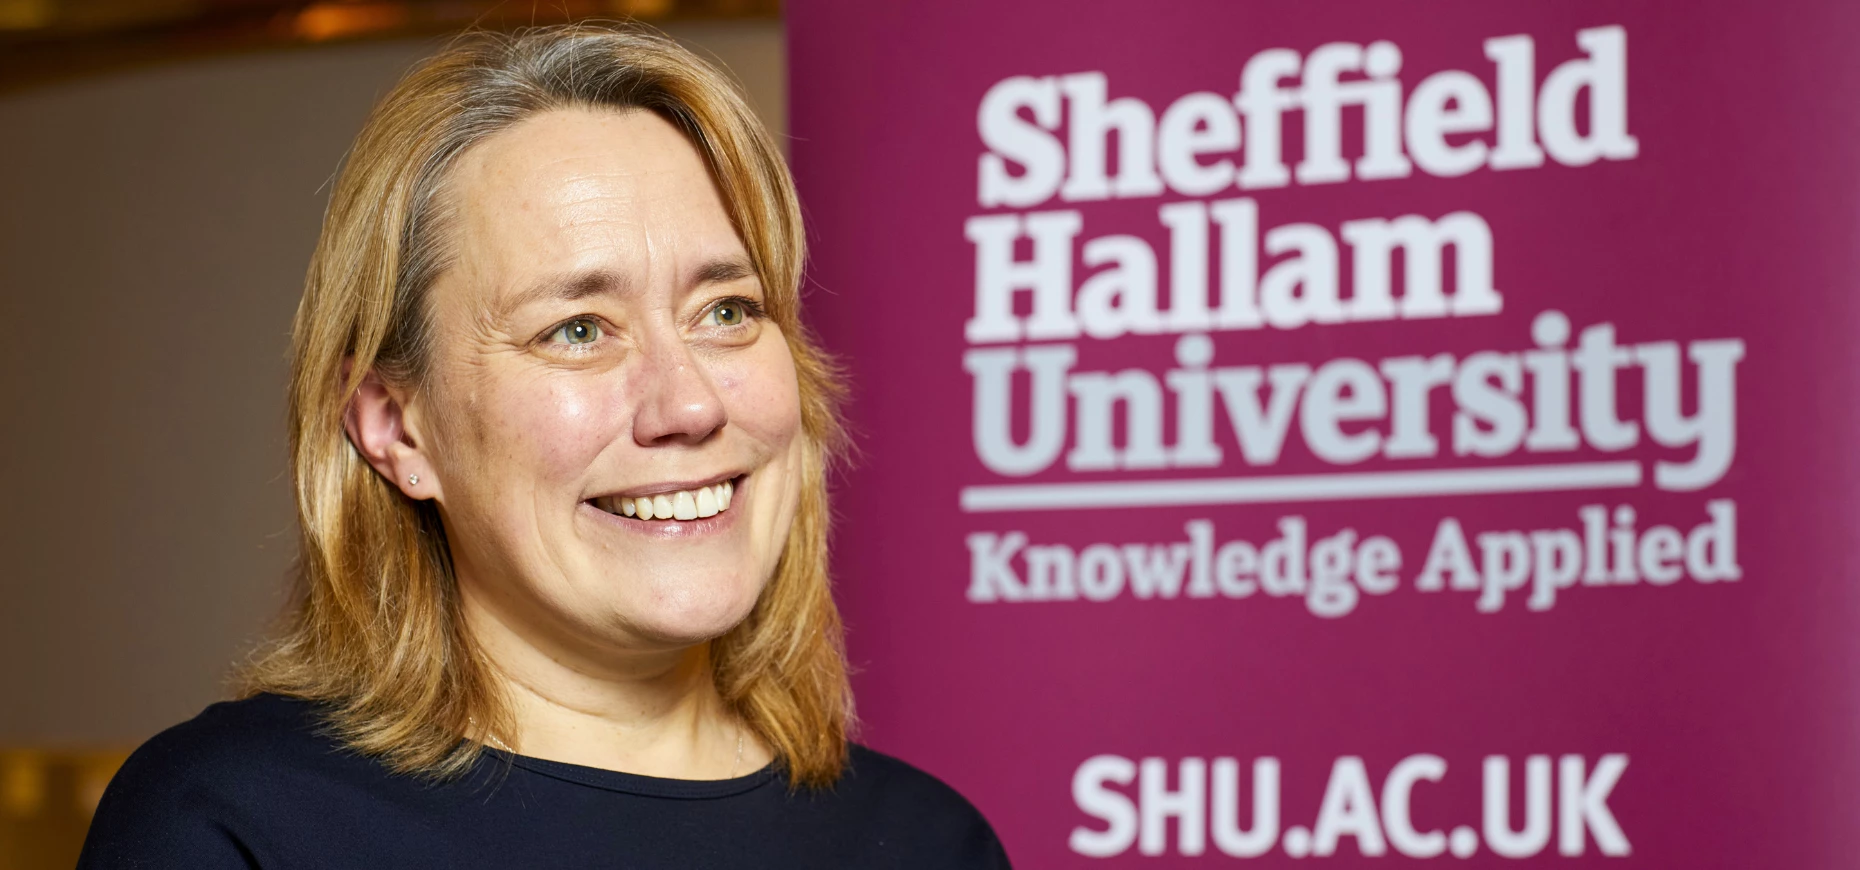 Professor Liz Mossop, newly appointed Vice-Chancellor of Sheffield Hallam University.